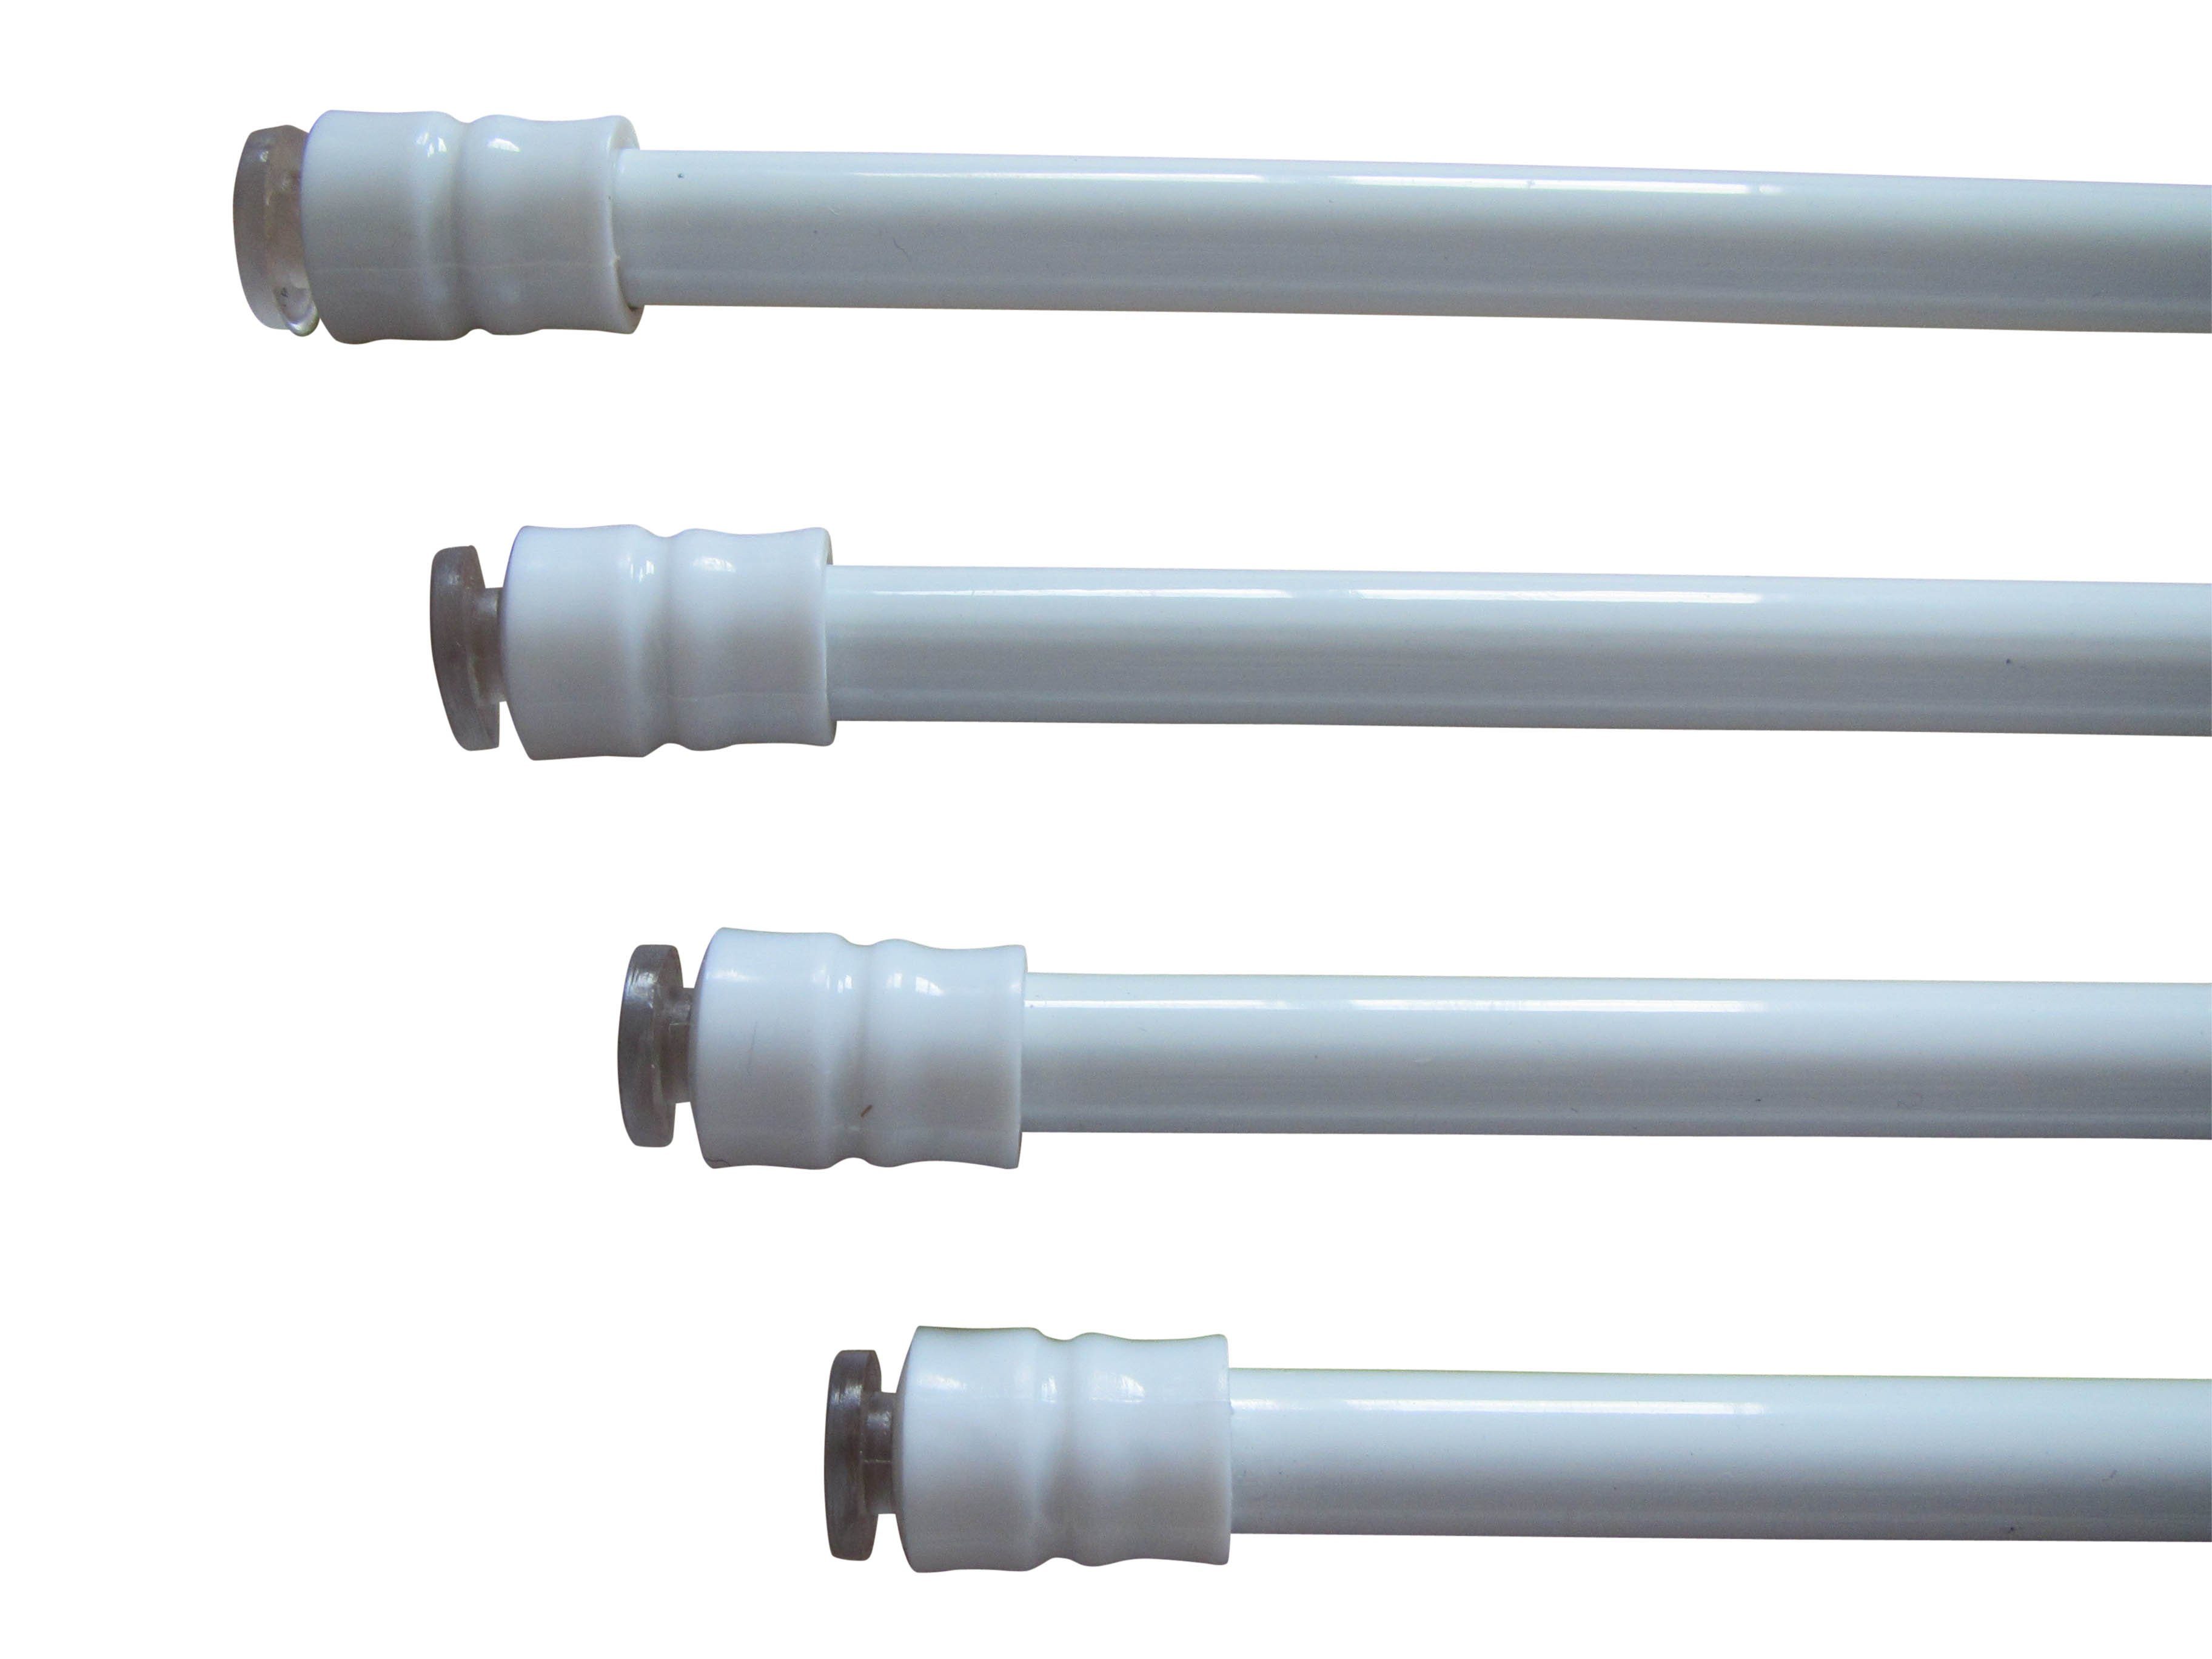 Gardinenstangen – Farbe: Klemmstange 4 Stück 8mm, geklemmt, Klemmstangen weiß ausdrehbar, 4 rewagi, Verkaufseinheit Ø